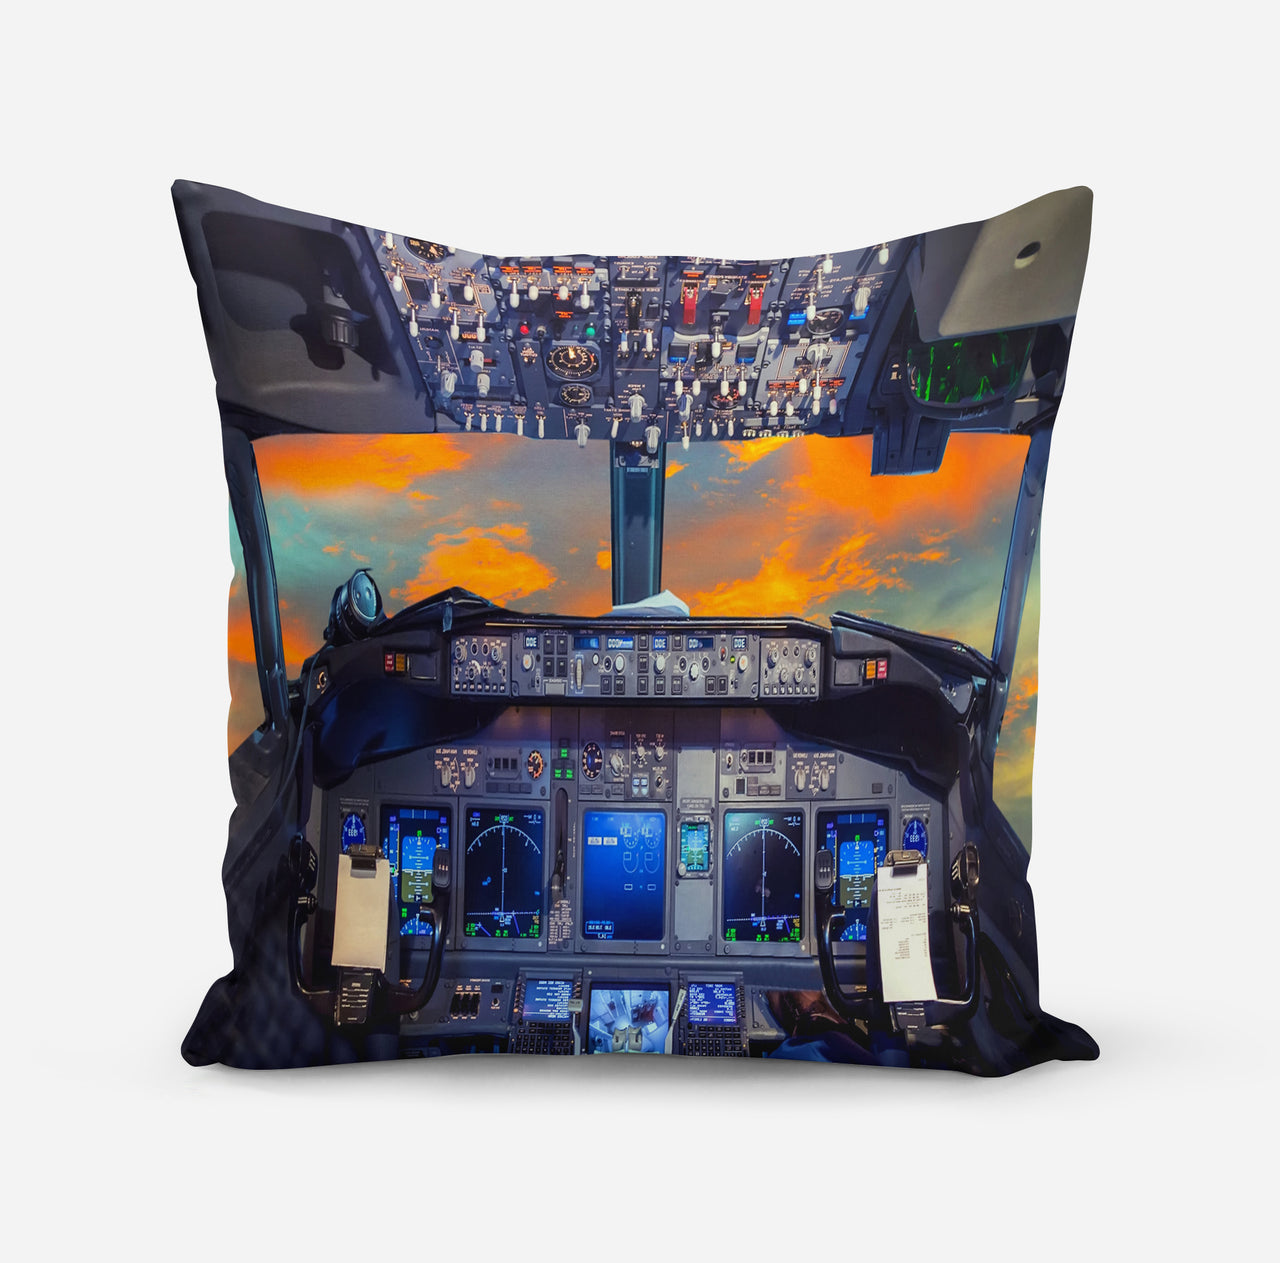 Amazing Boeing 737 Cockpit Designed Pillows